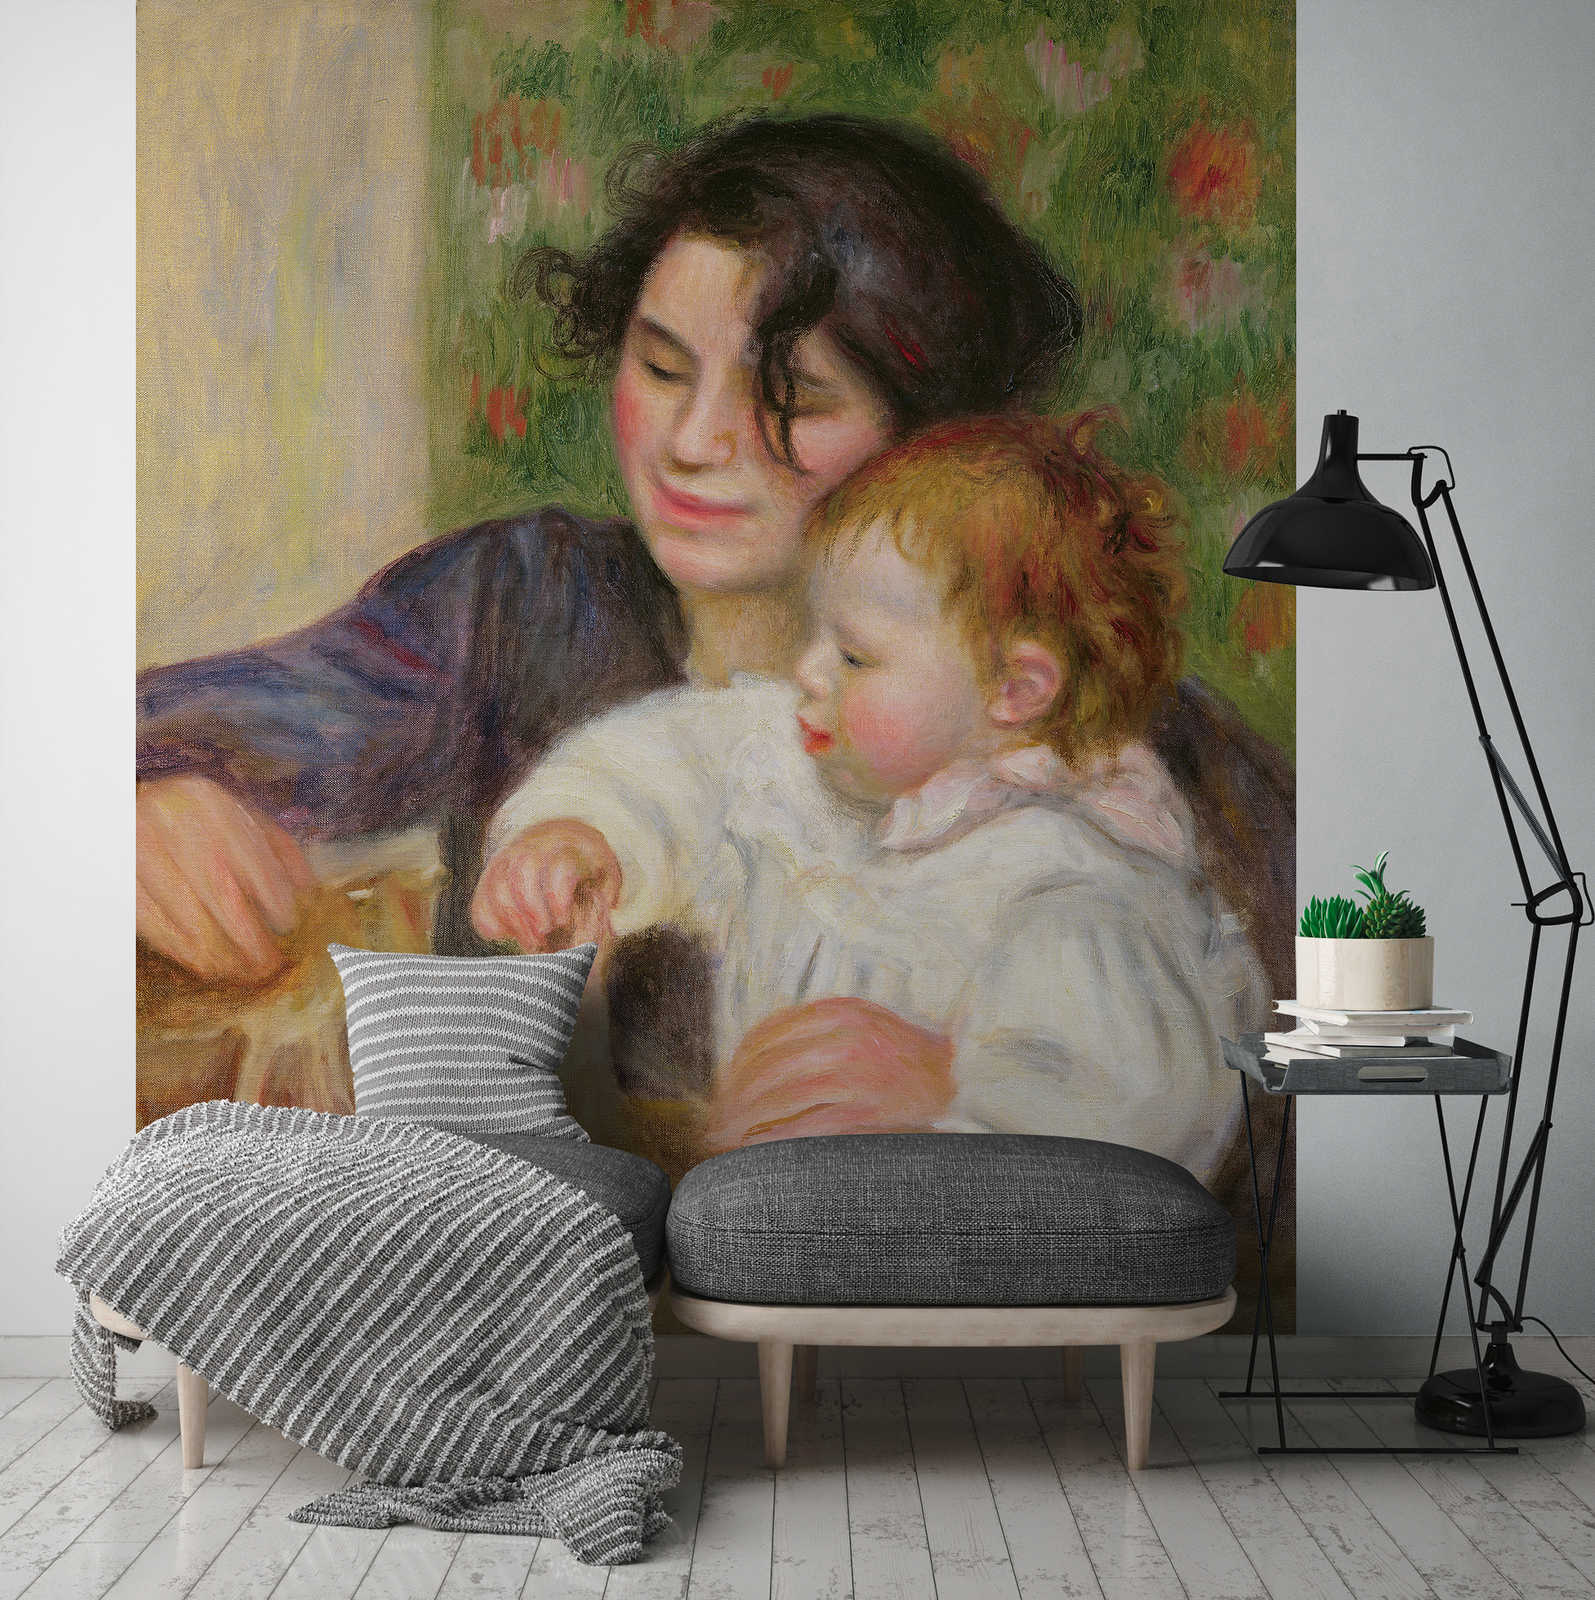             Muurschildering "Gabrielle en Jean" van Pierre Auguste Renoir
        